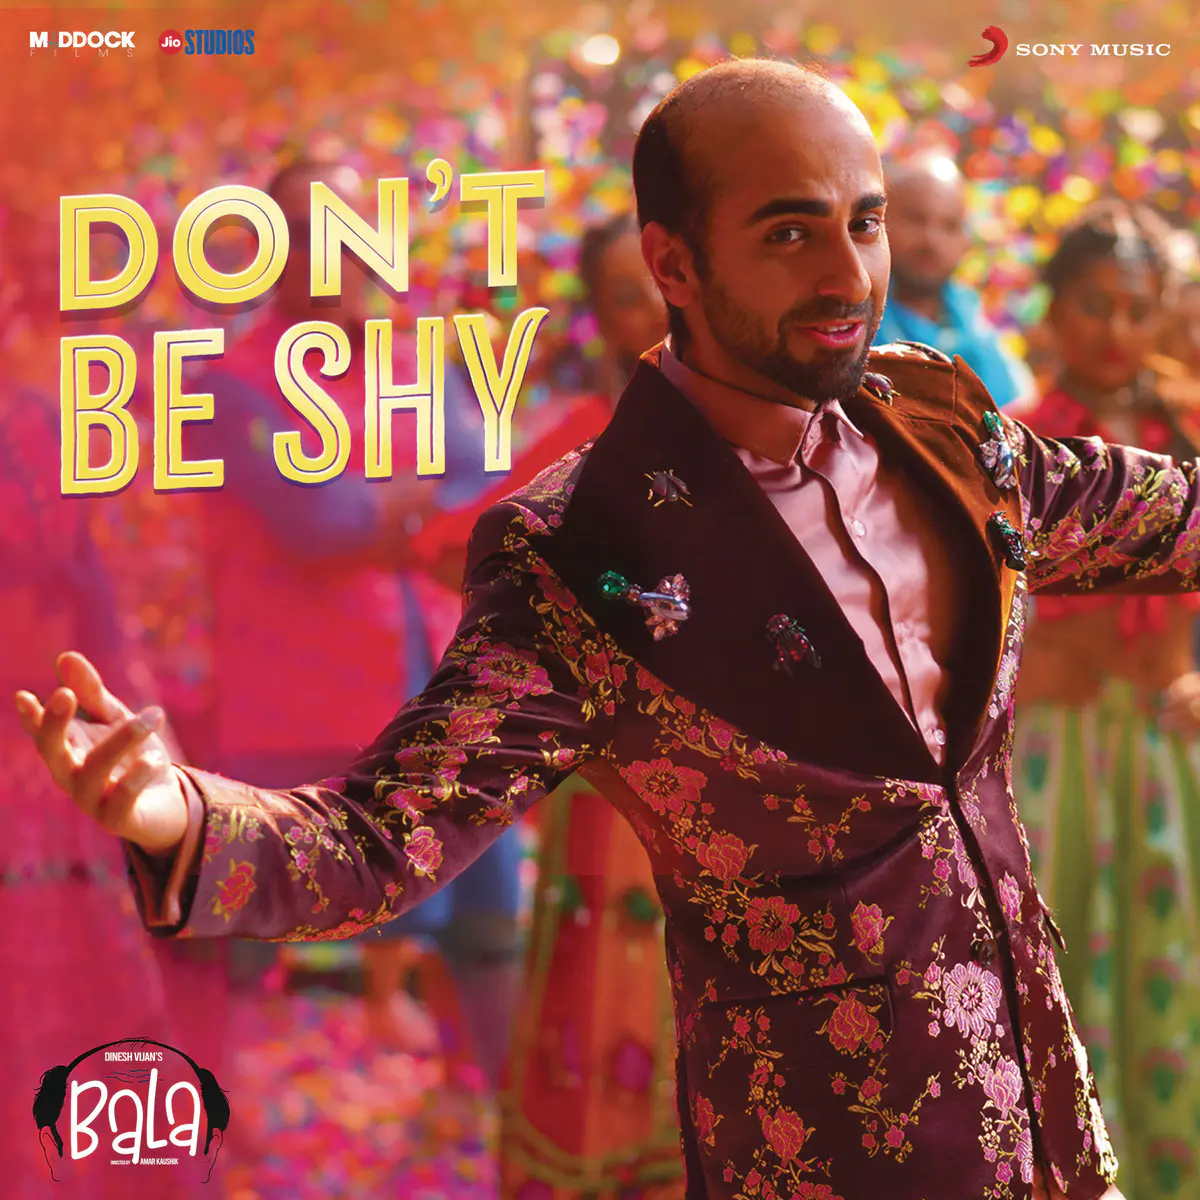 Don T Be Shy Again Lyrics In Hindi Bala Don T Be Shy Again Song Lyrics In English Free Online On Gaana Com